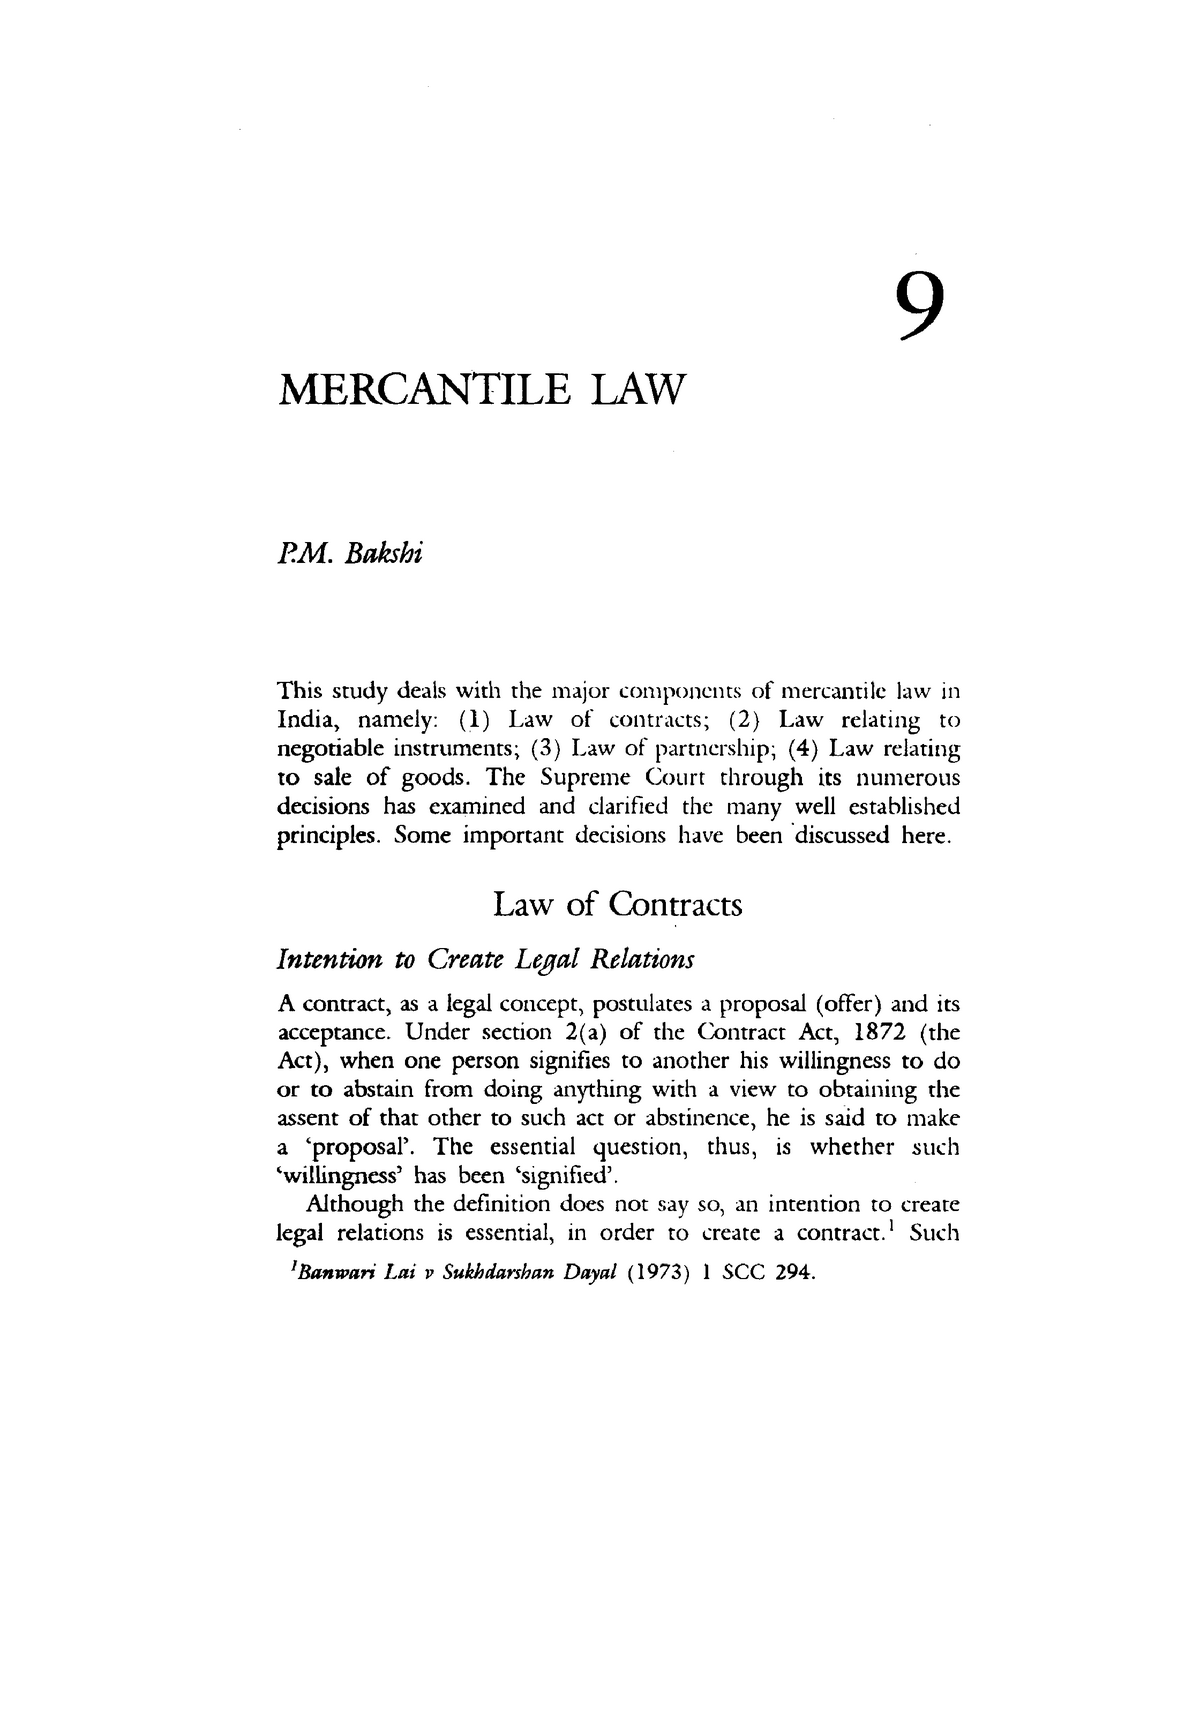 mercantile law case study